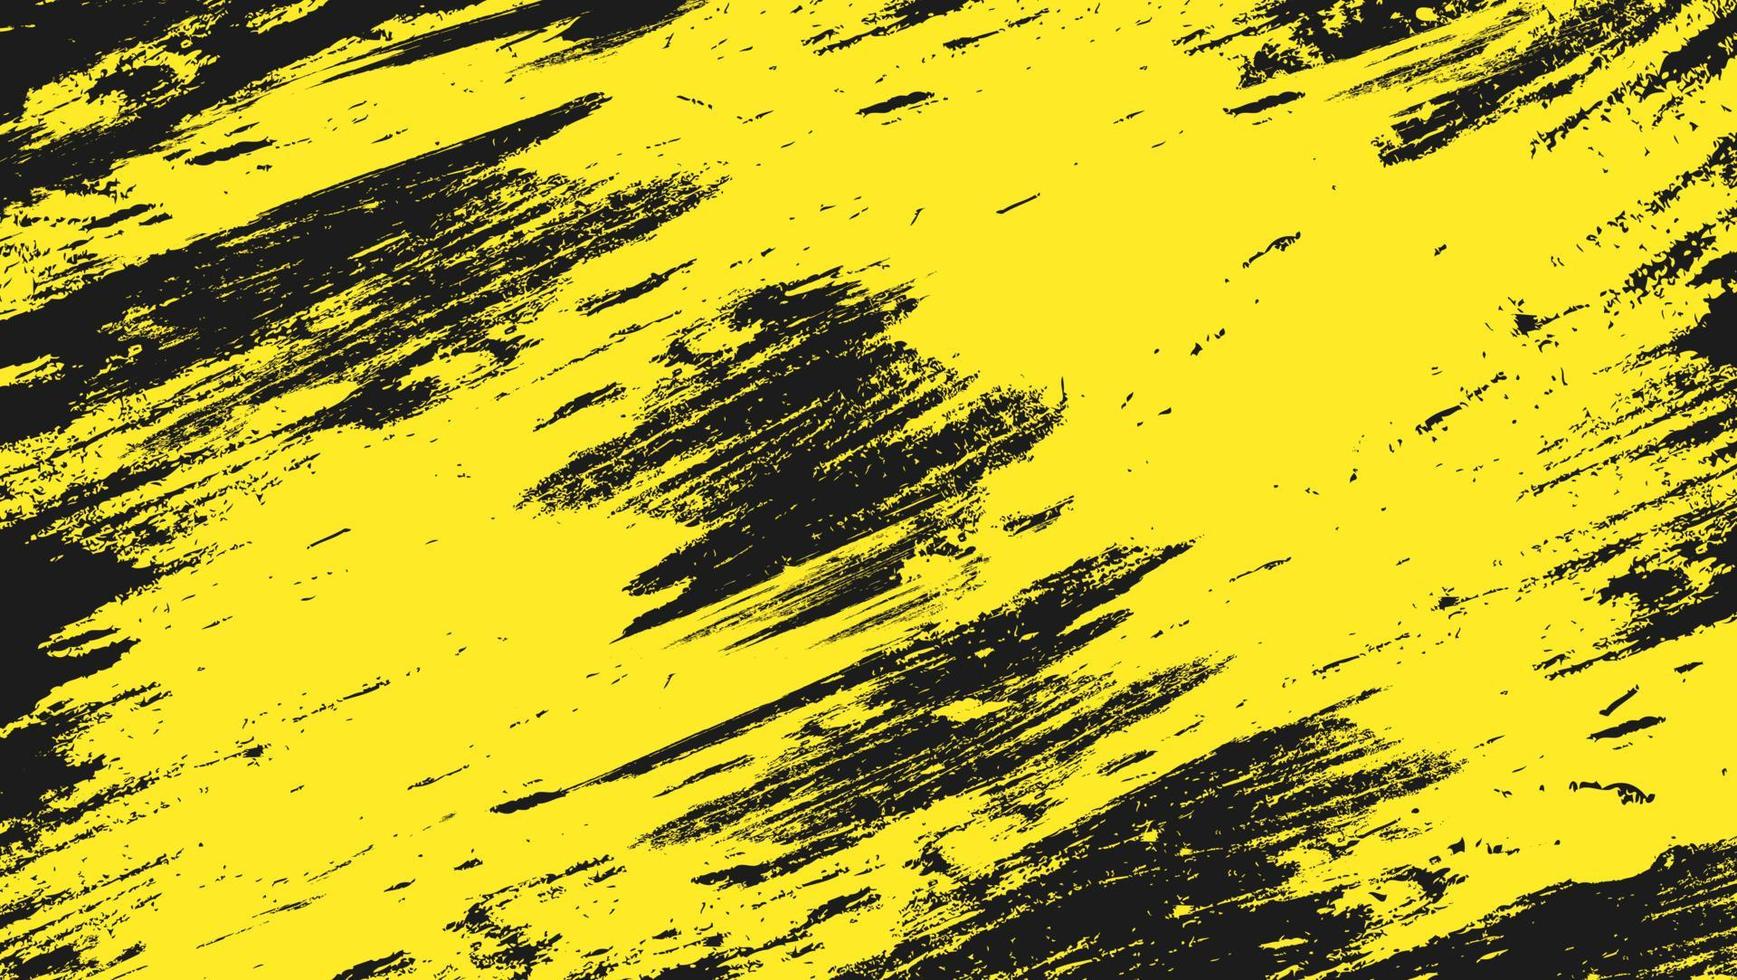 abstrakt gul grunge textur design i mörk bakgrund vektor